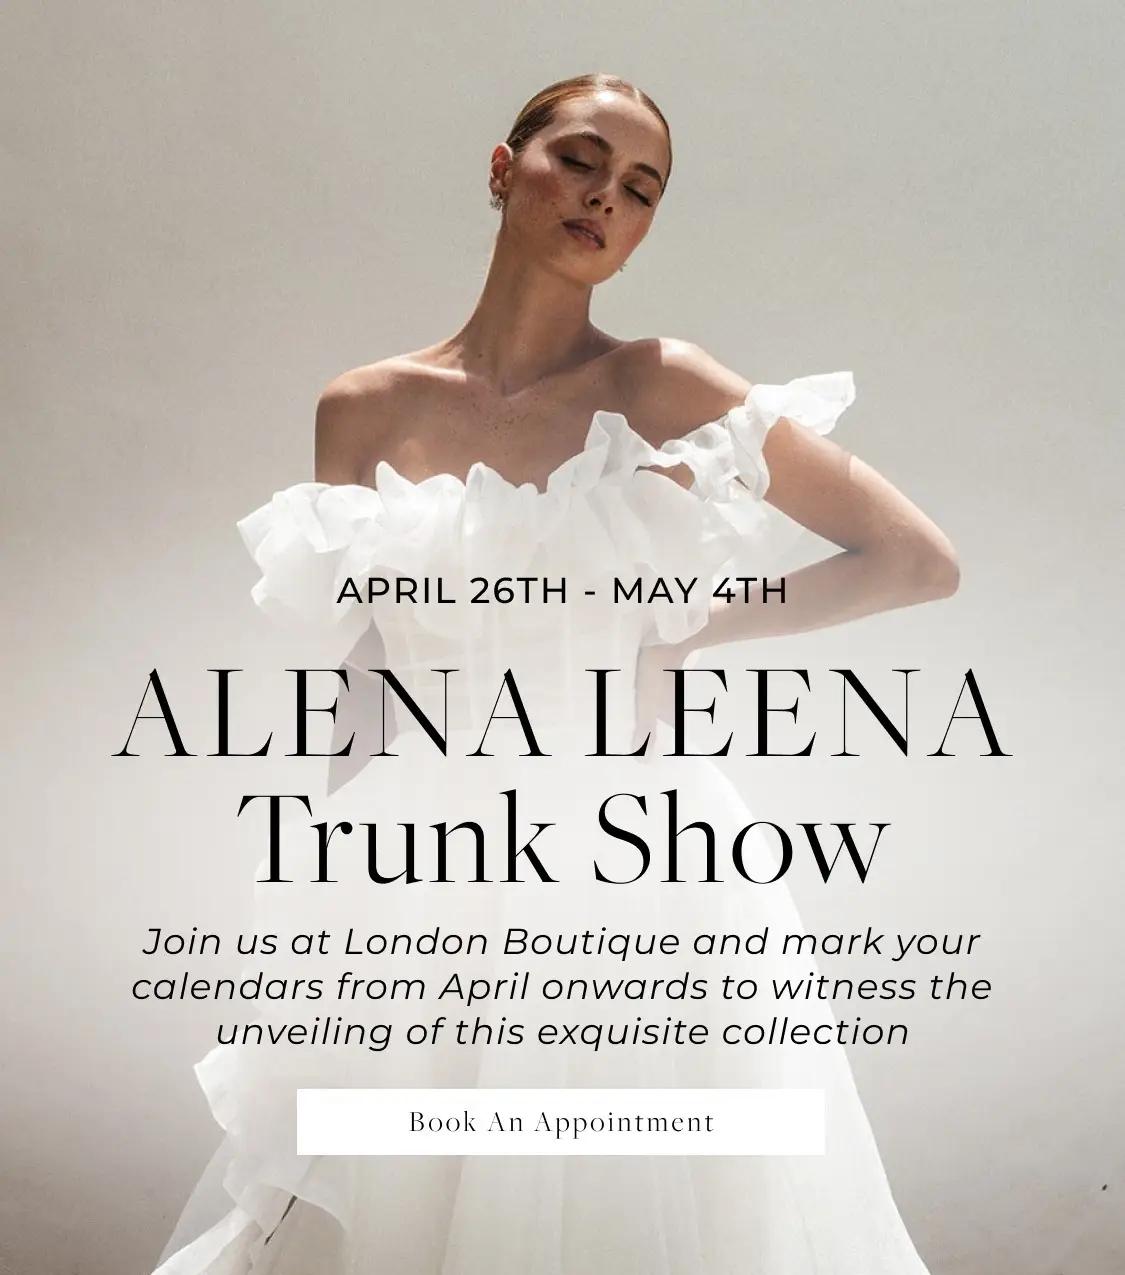 Alena Leena Trunk Show mobile banner